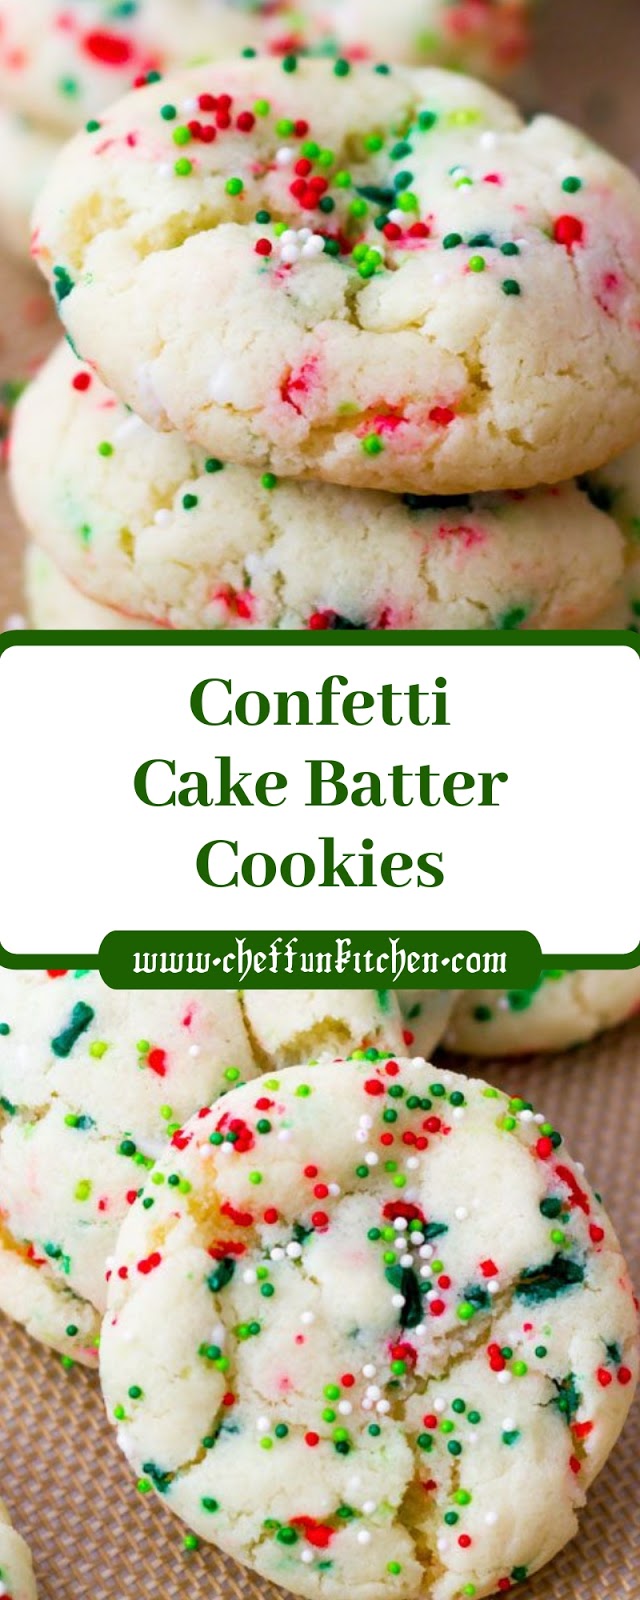 Confetti Cake Batter Cookies